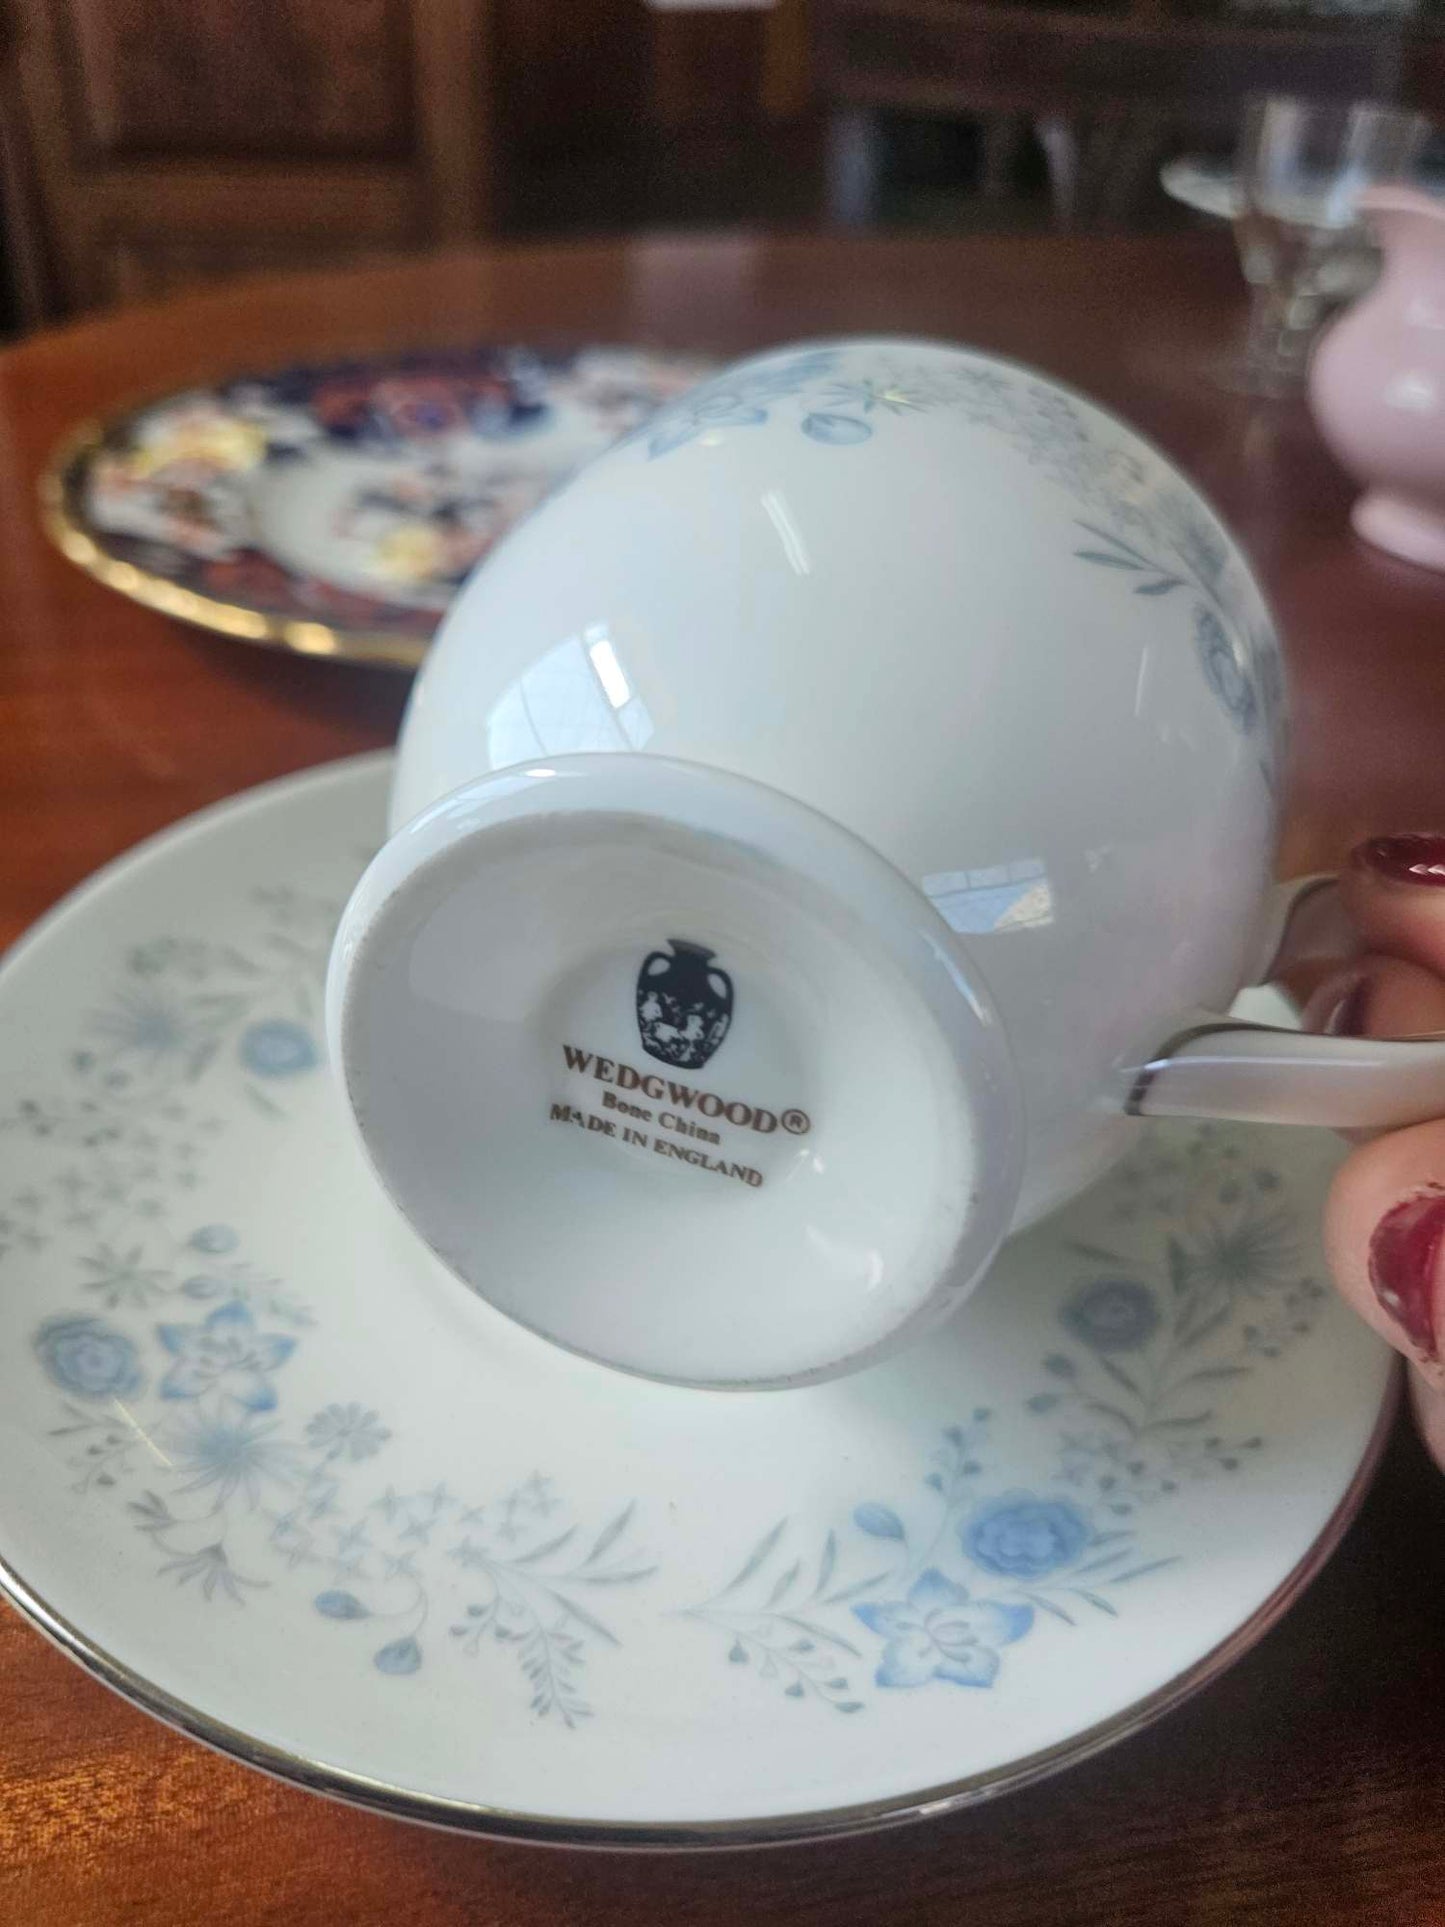 Wedgewood teacup and saucer